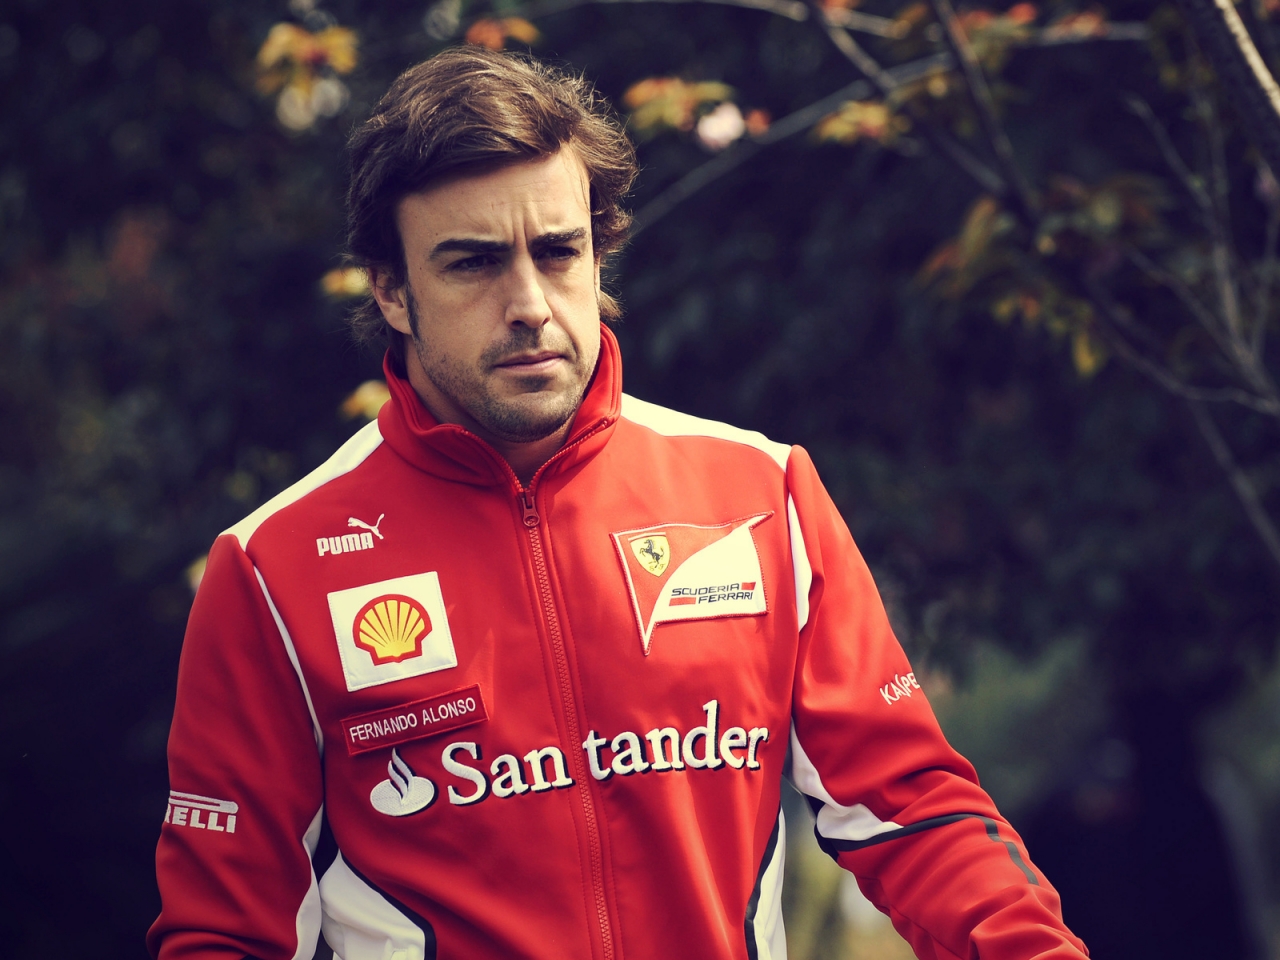 Fernando Alonso Look for 1280 x 960 resolution